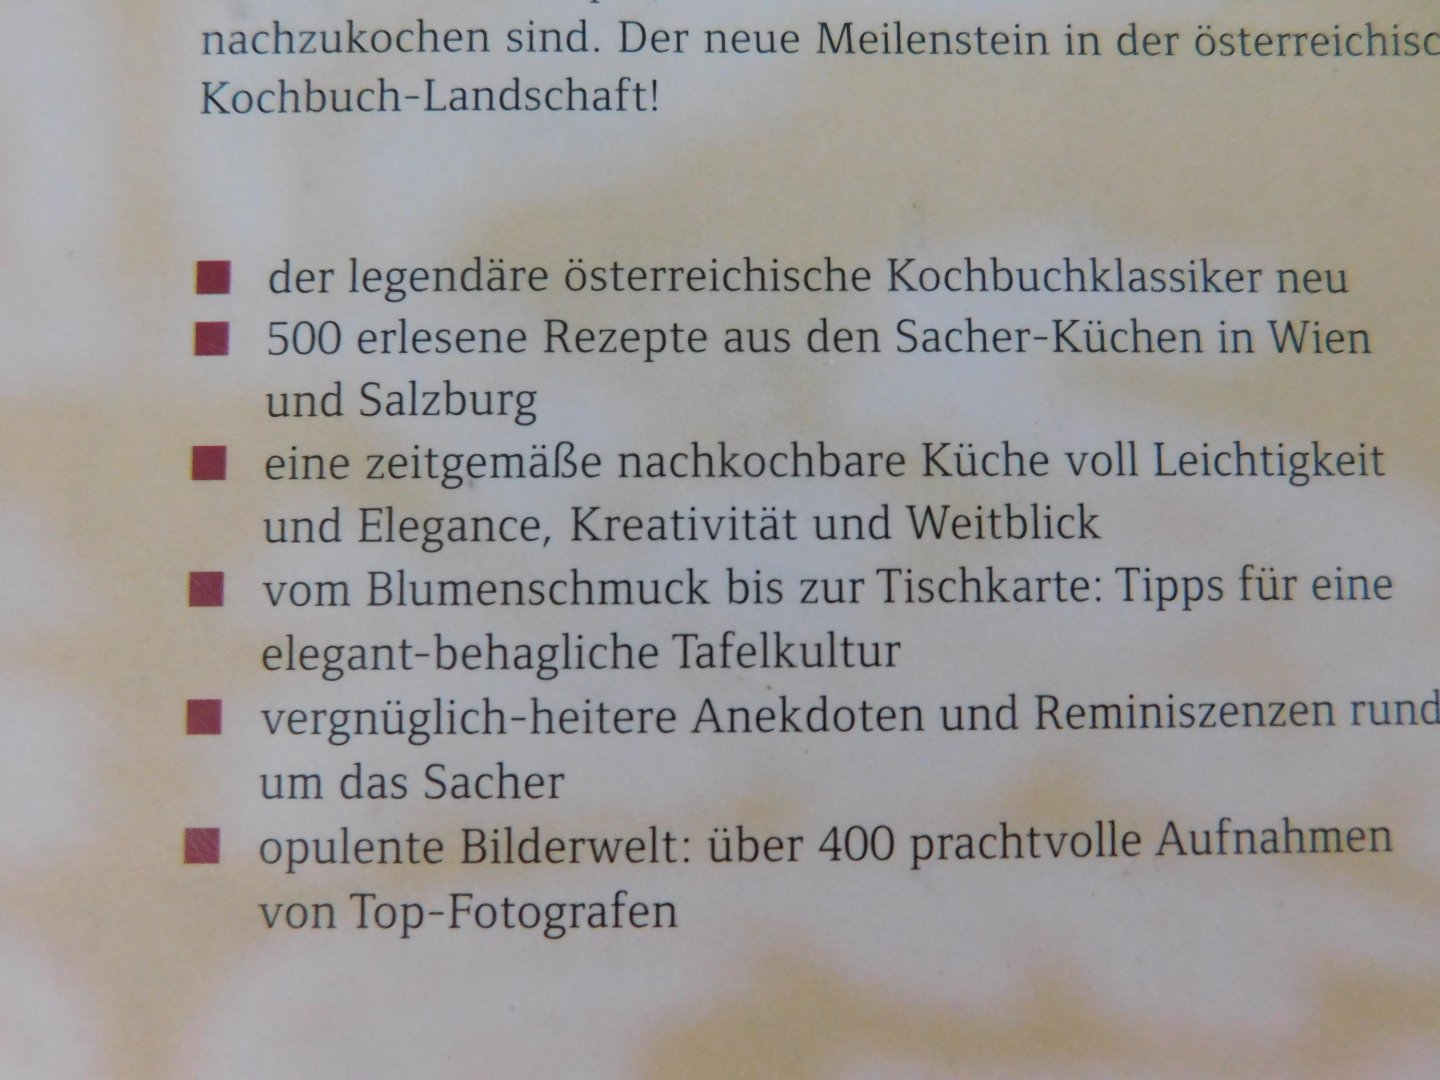 Gurtler / Wagner - Das Neue Sacher Kochbuch